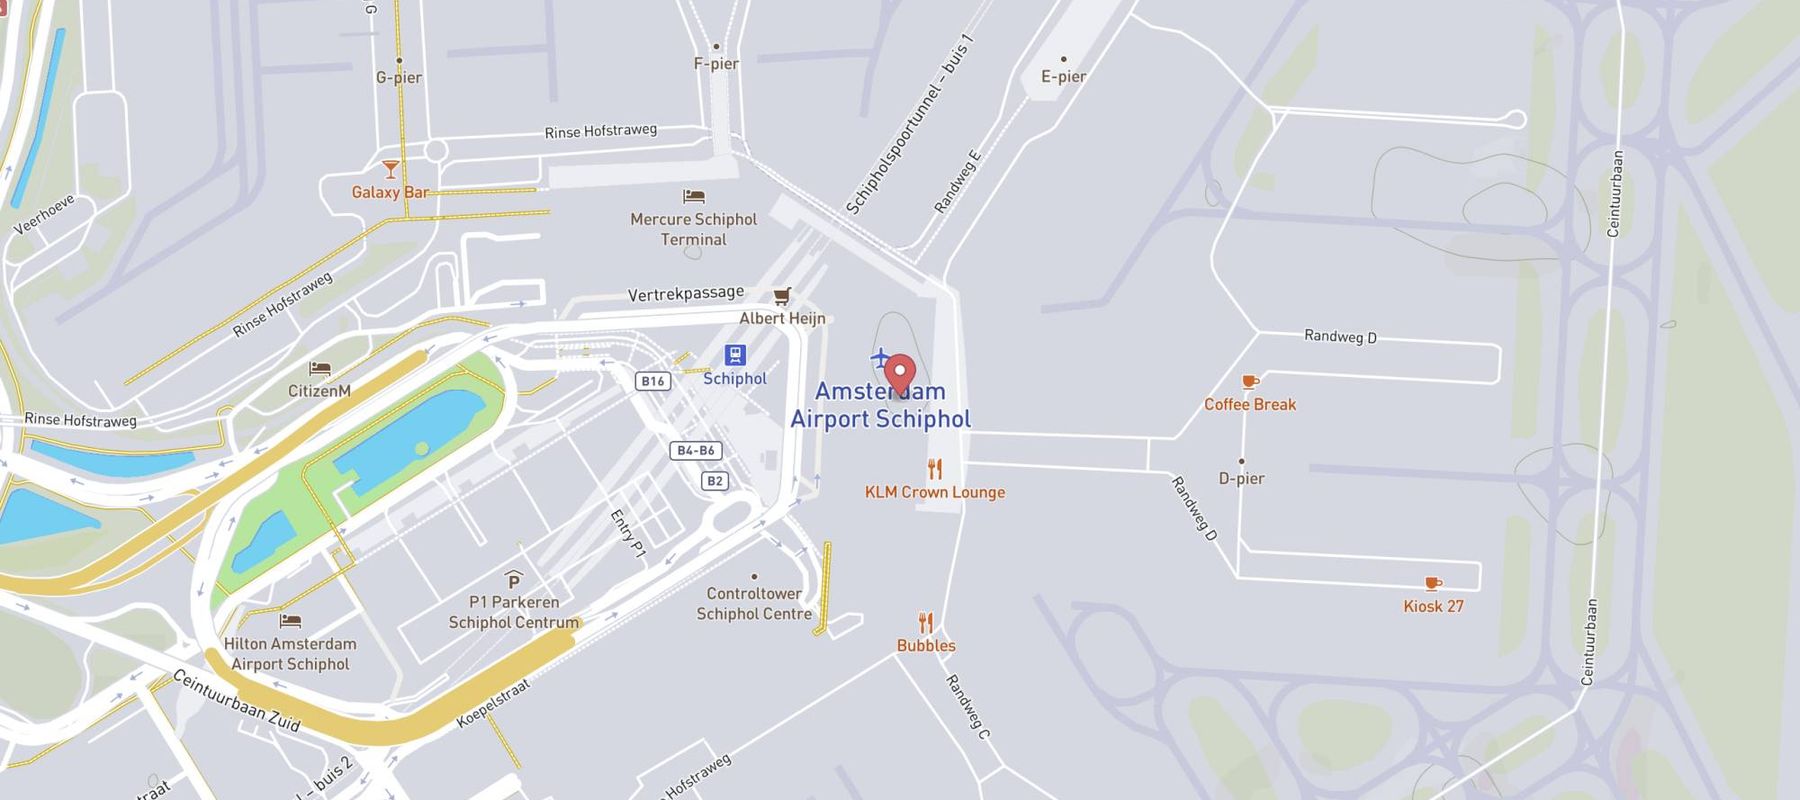 McDonald's Airport Schiphol Lounge 2 map